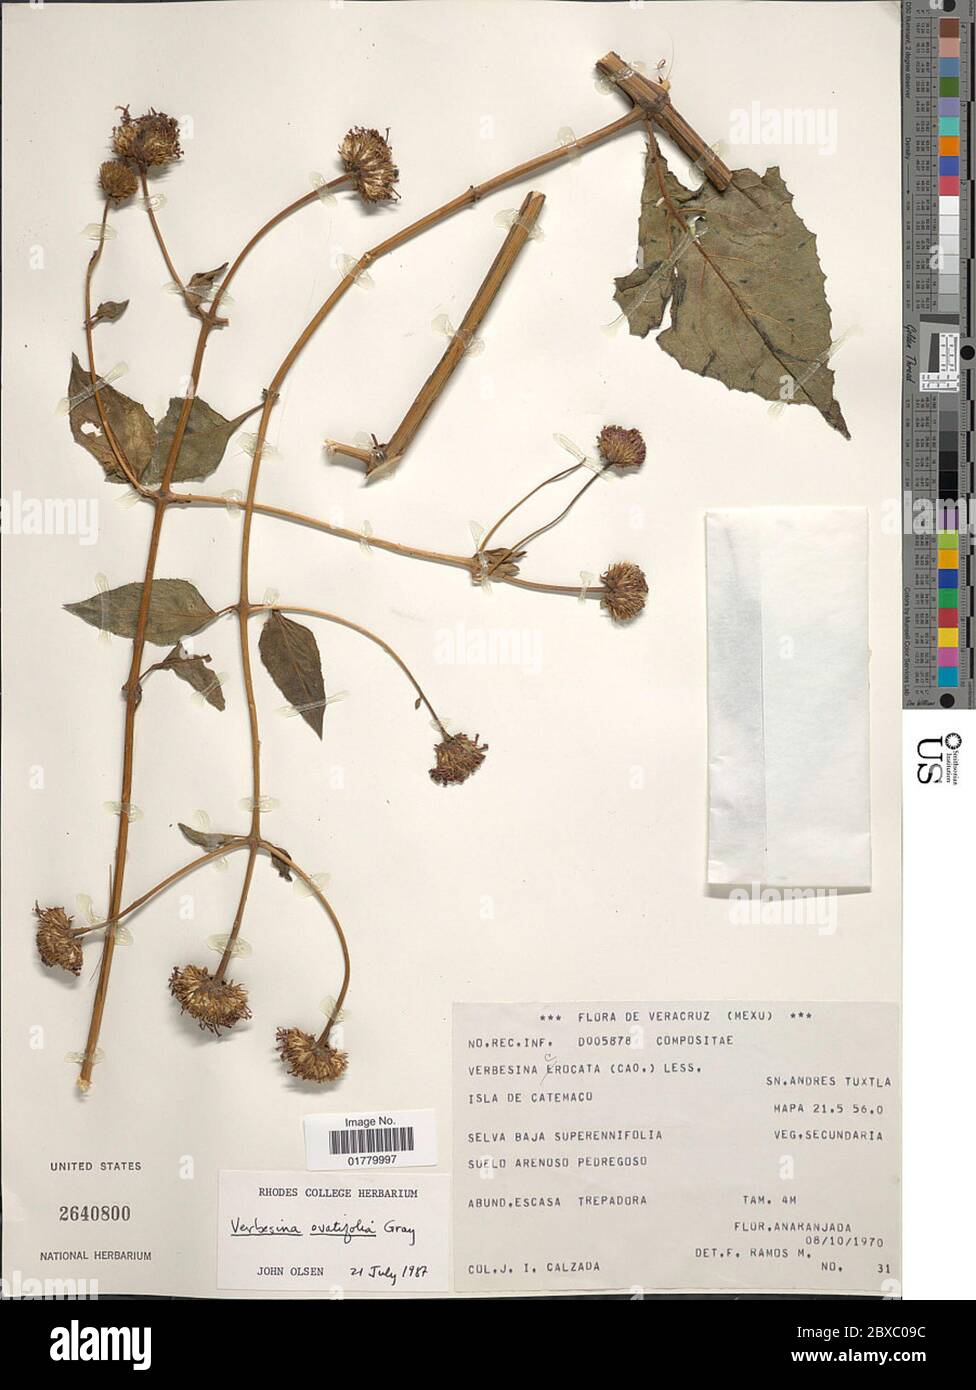 Verbesina ovatifolia A Gray ex Hemsl Verbesina ovatifolia A Gray ex Hemsl. Stock Photo